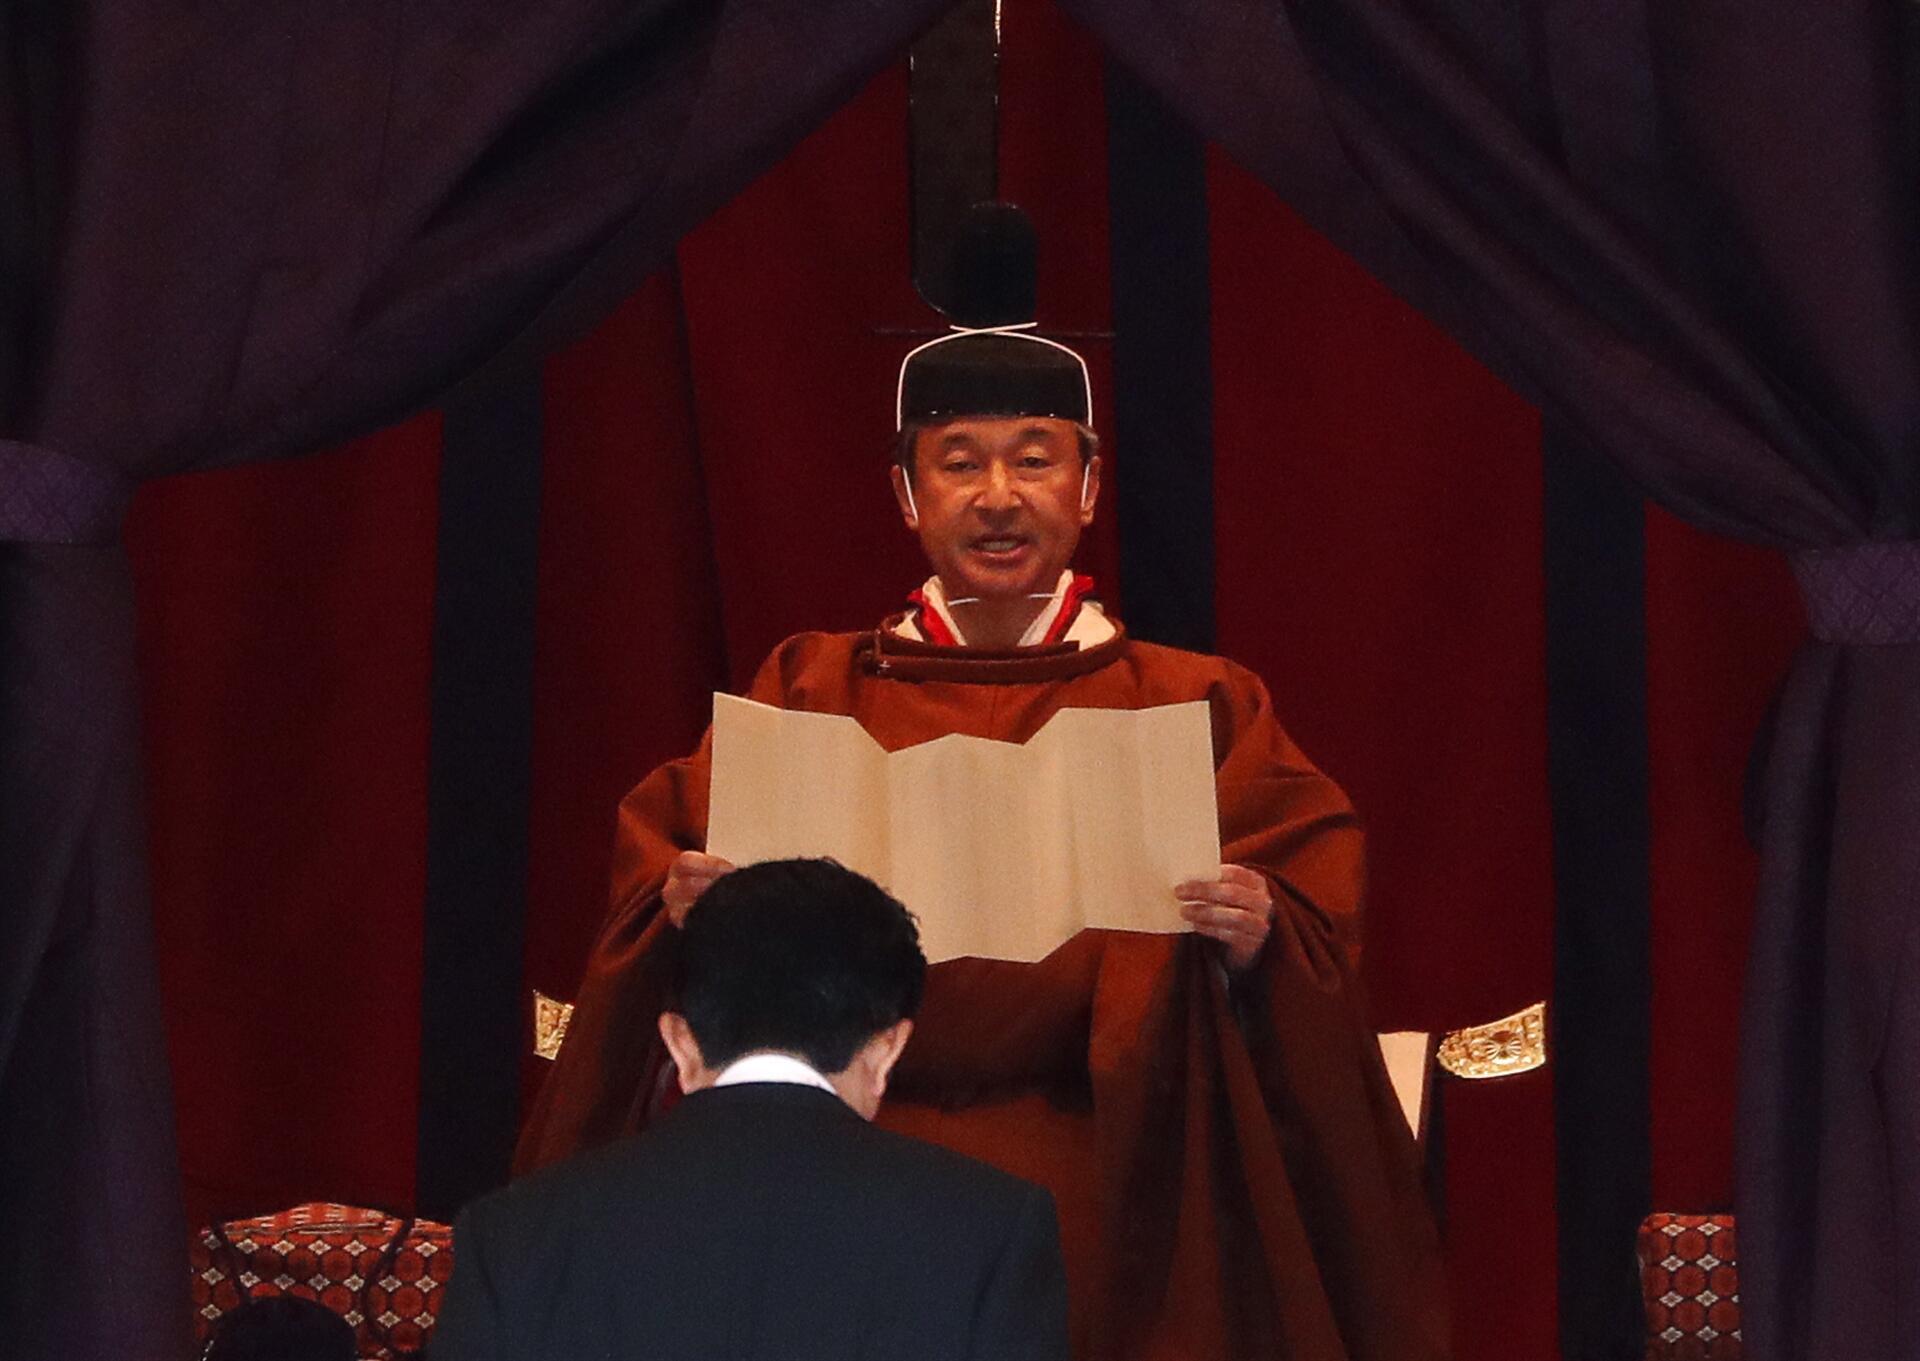 Japonya'nın 126 İmparatoru Naruhito tahta çıktı